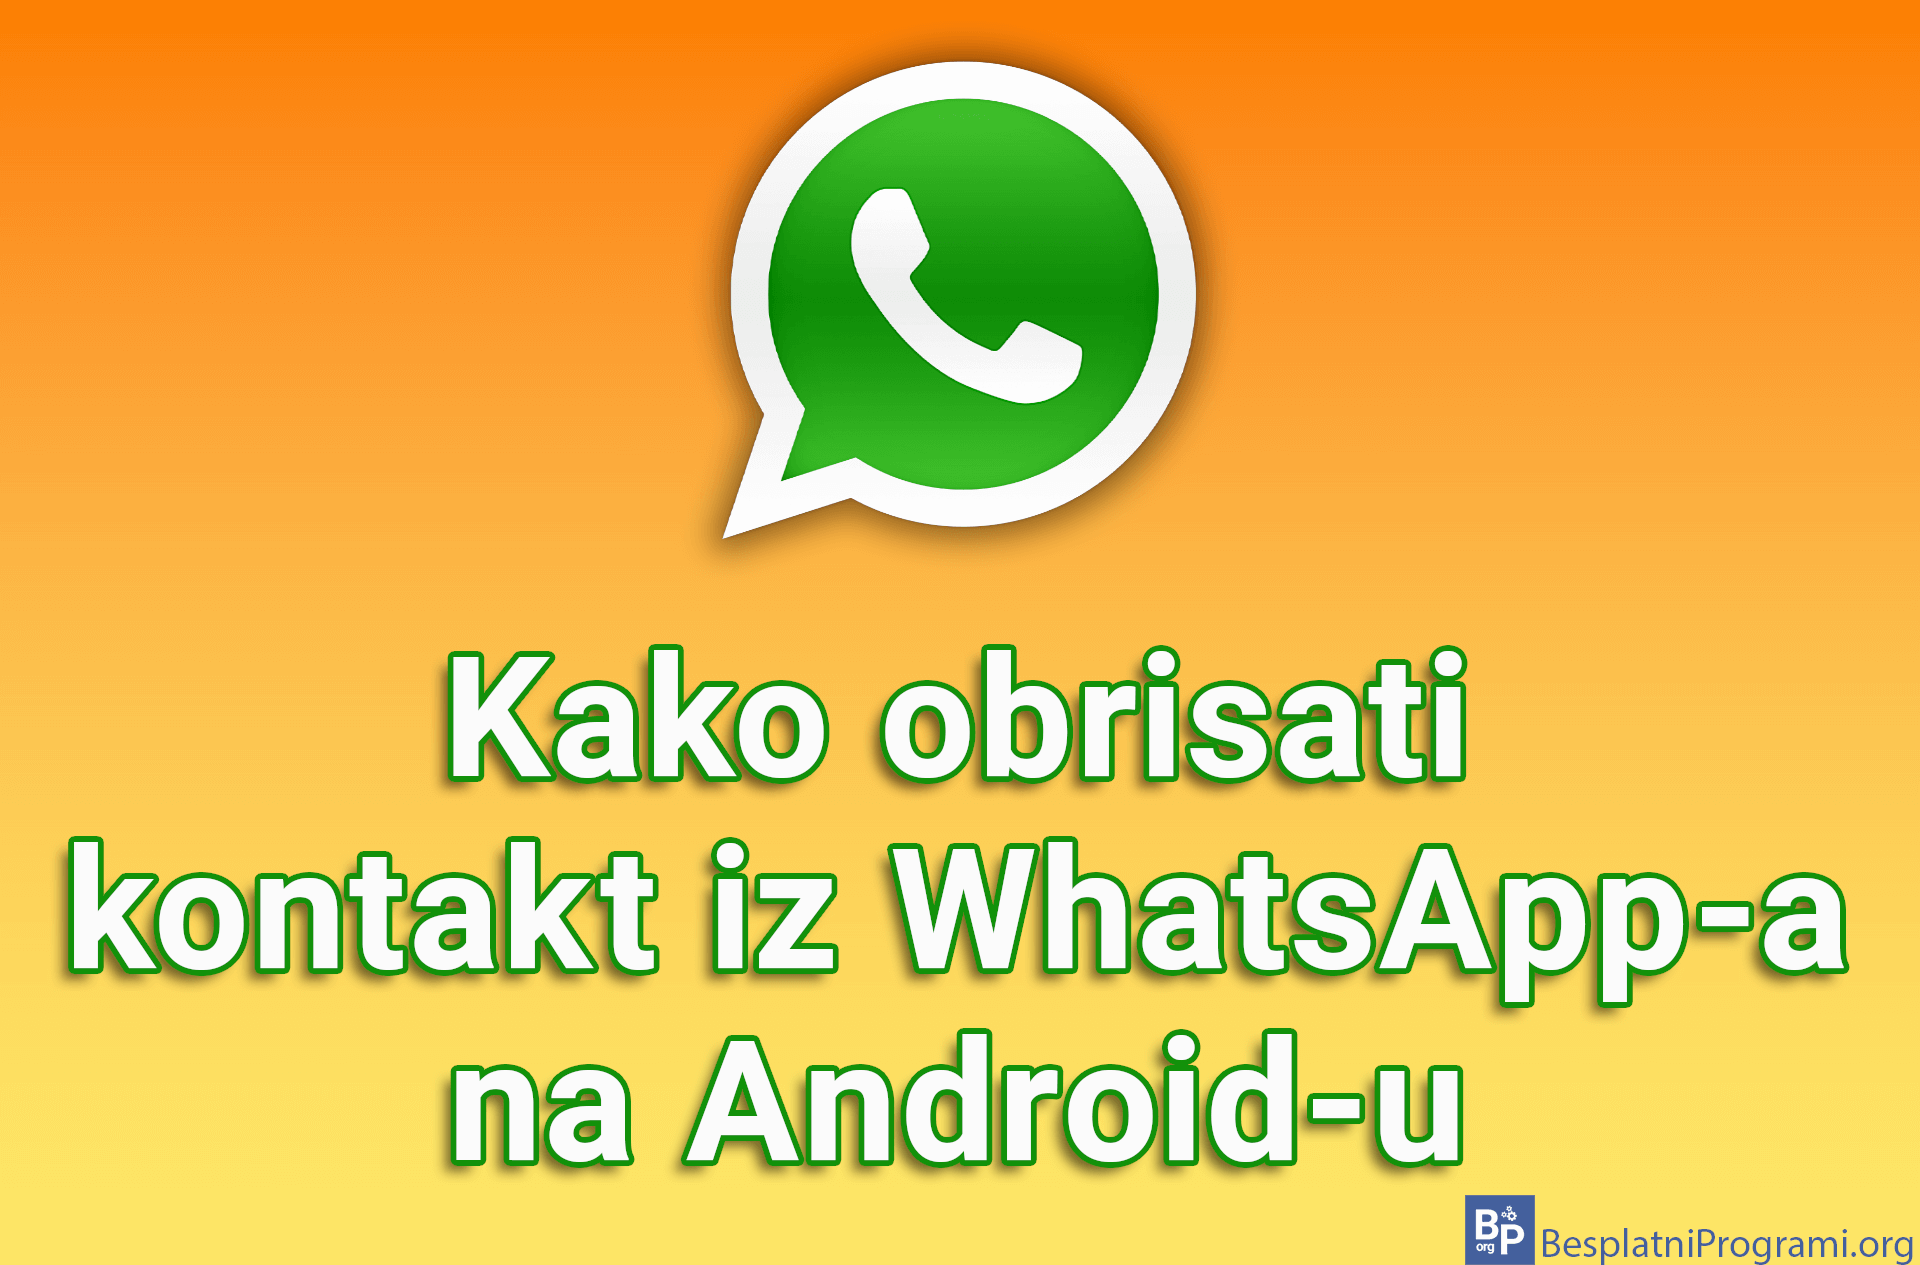 Kako obrisati kontakt iz WhatsApp-a na Android-u